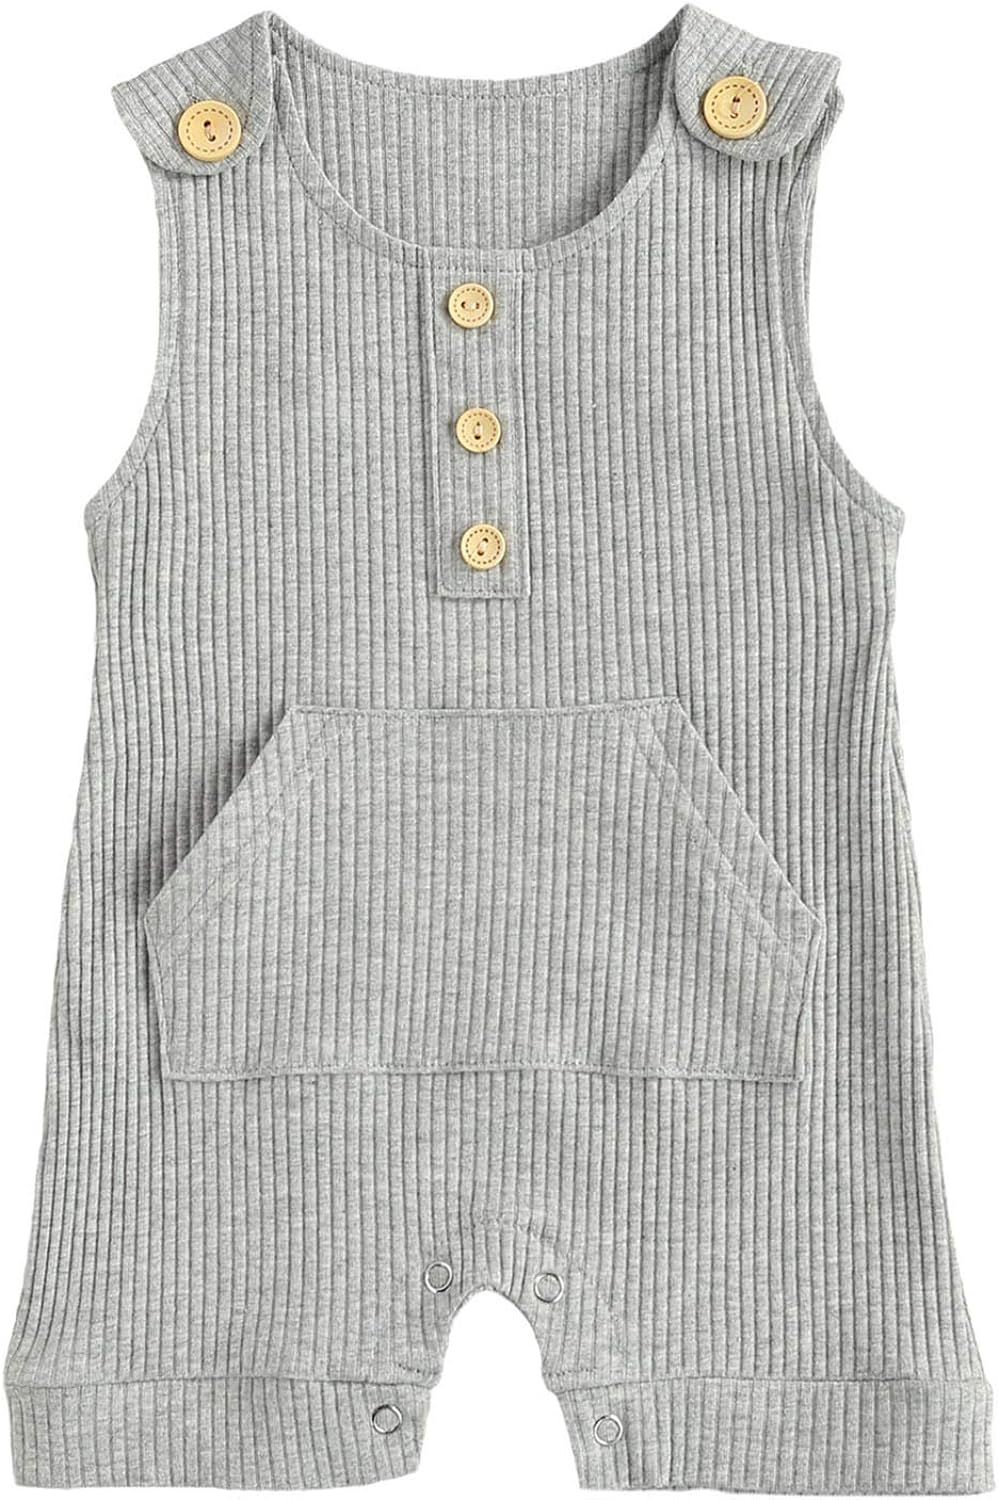 Mubineo Newborn Baby Boy Girl Basic Plain Sleeveless Cotton Bib Romper Jumpsuit Outfit | Amazon (US)